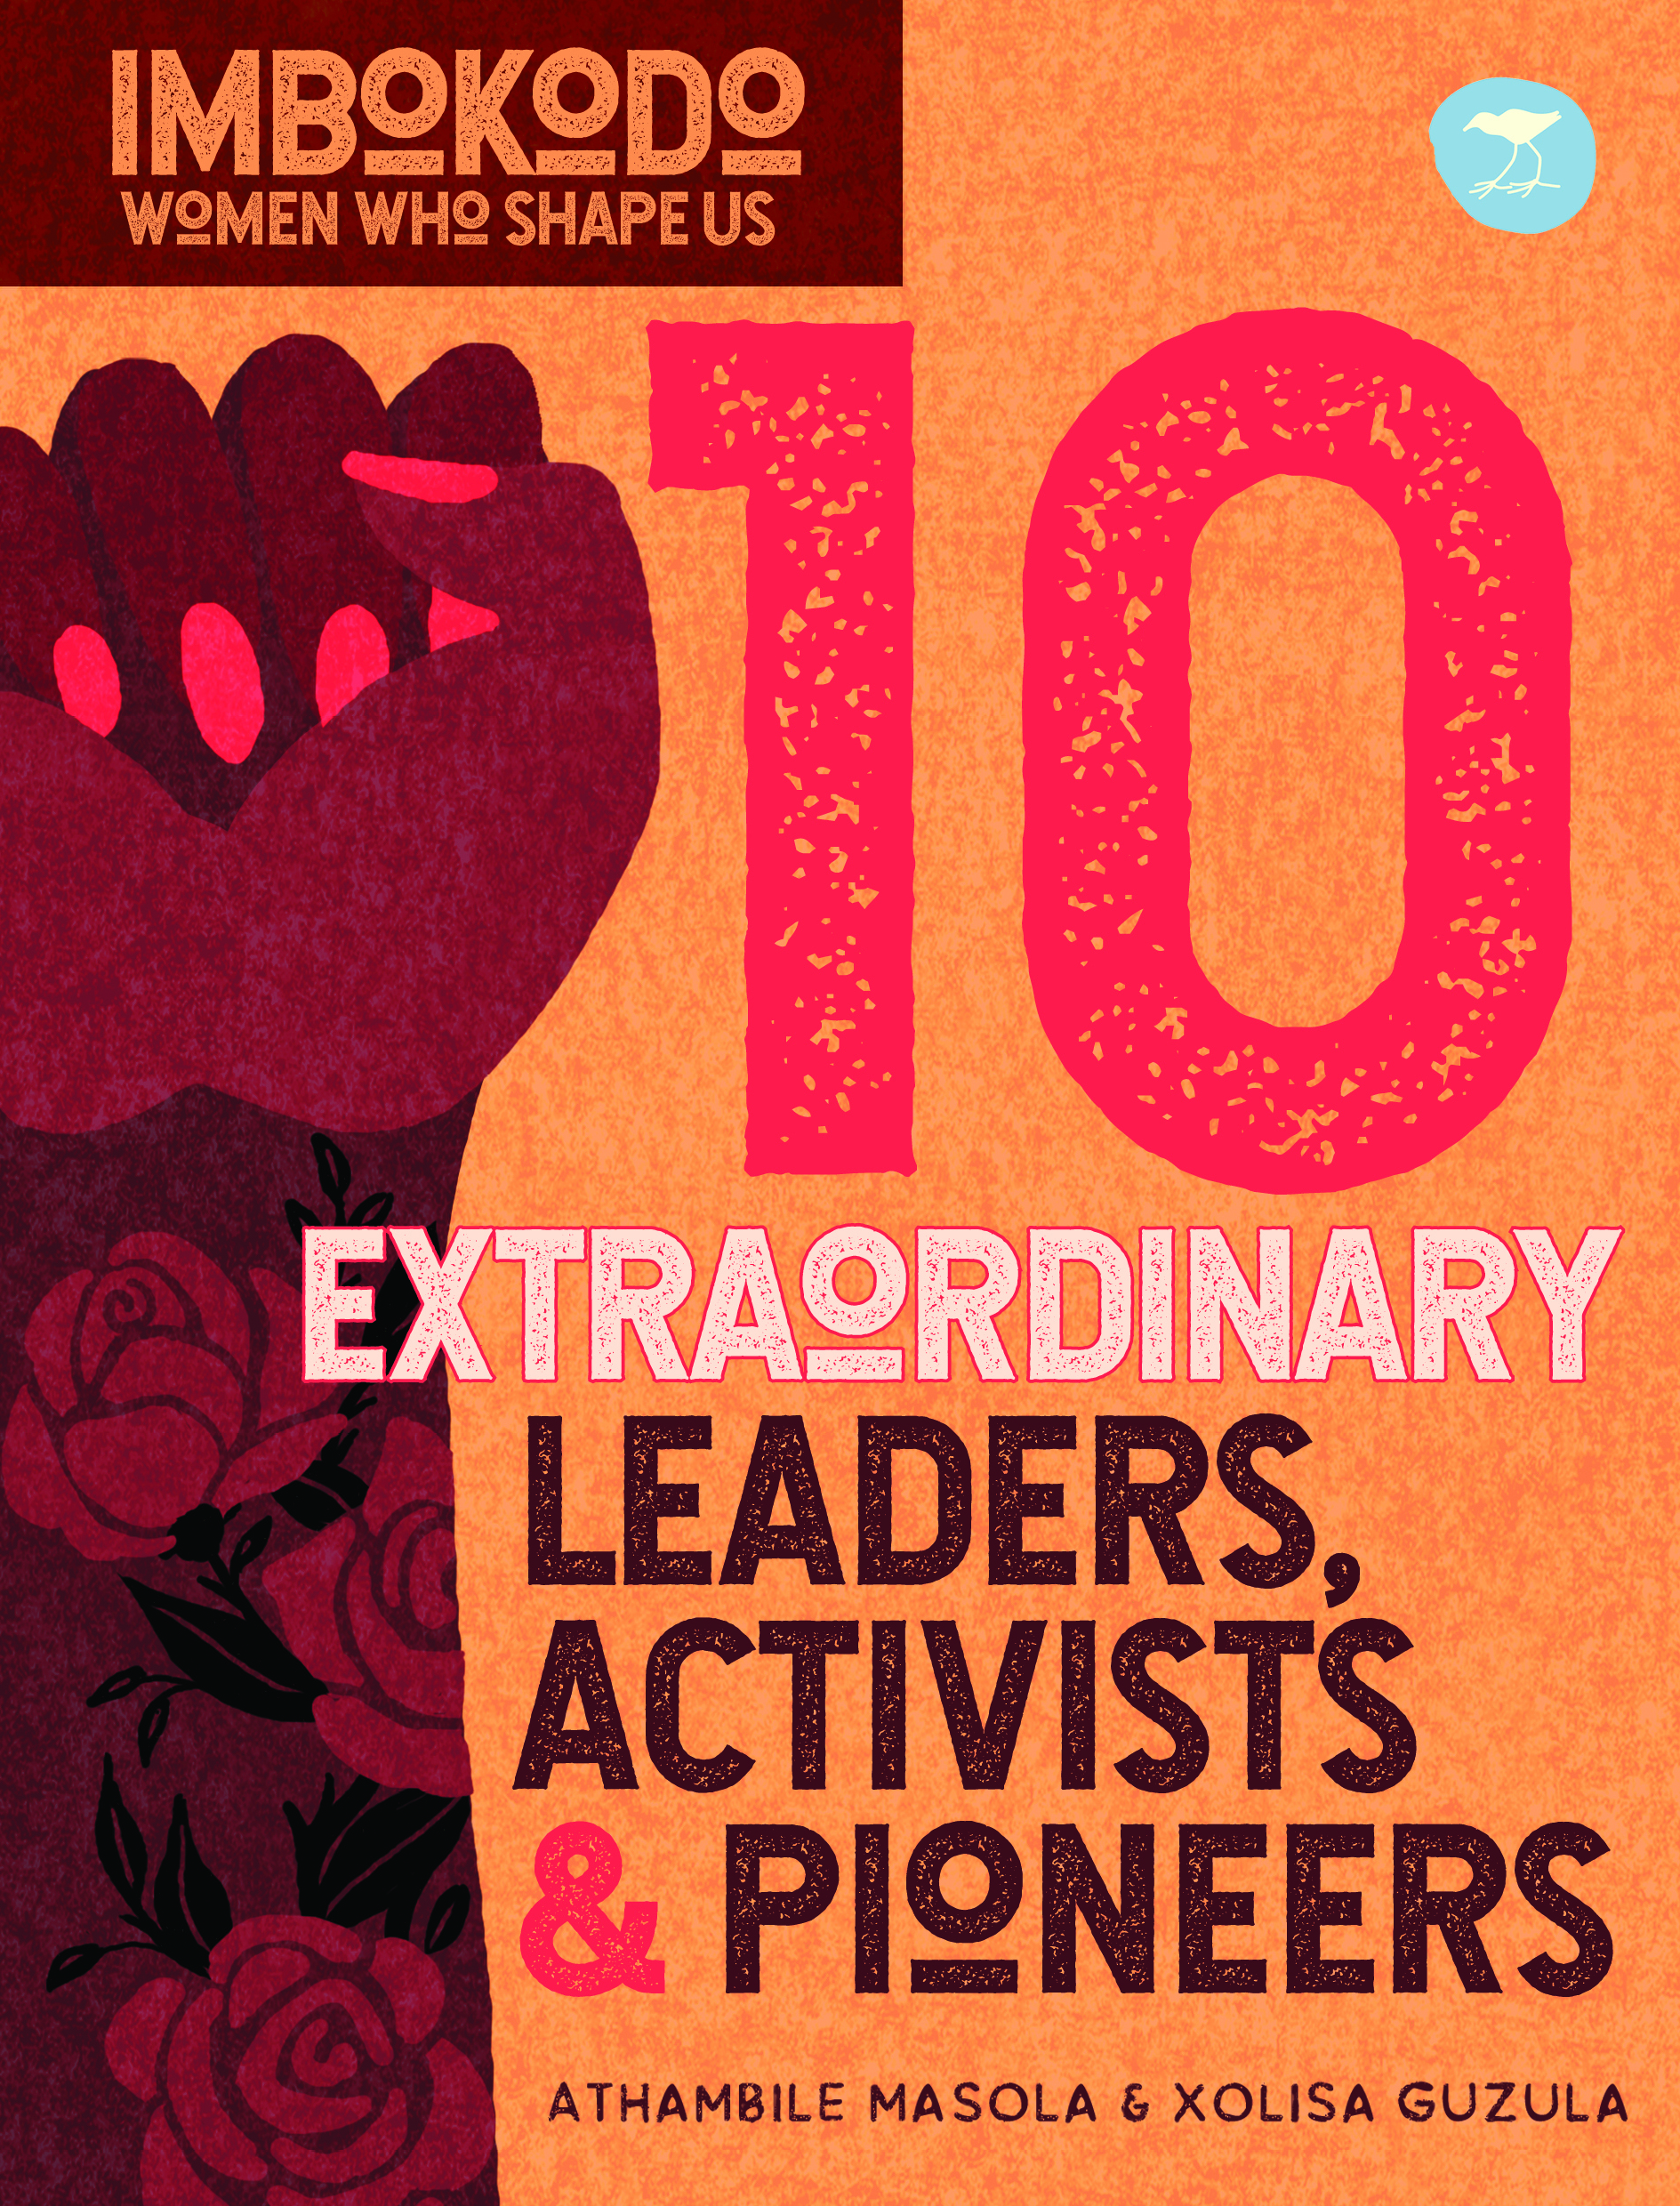 10 Extraordinary Leaders, Activists & Pioneers